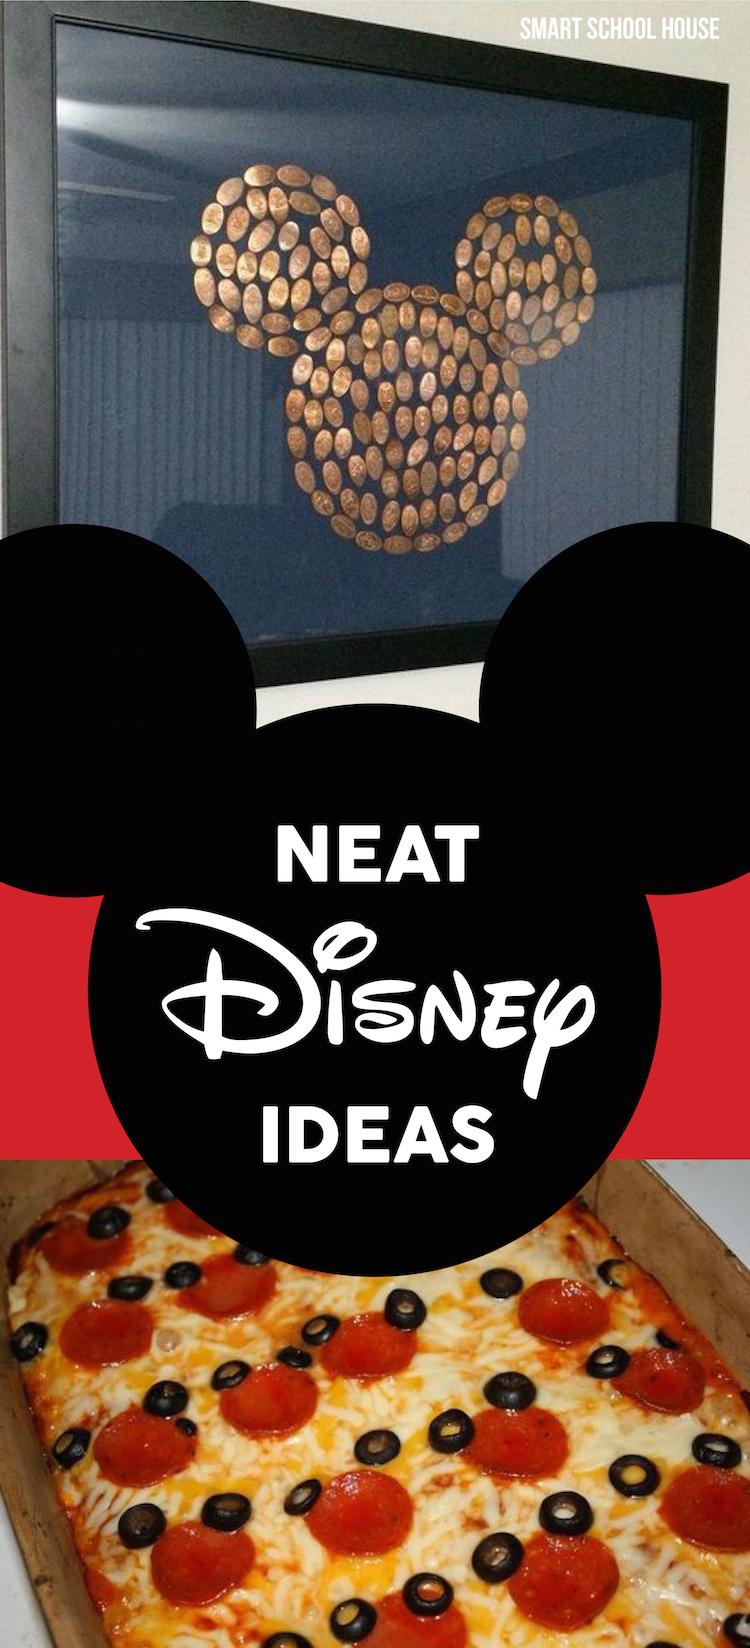 Neat Disney Ideas